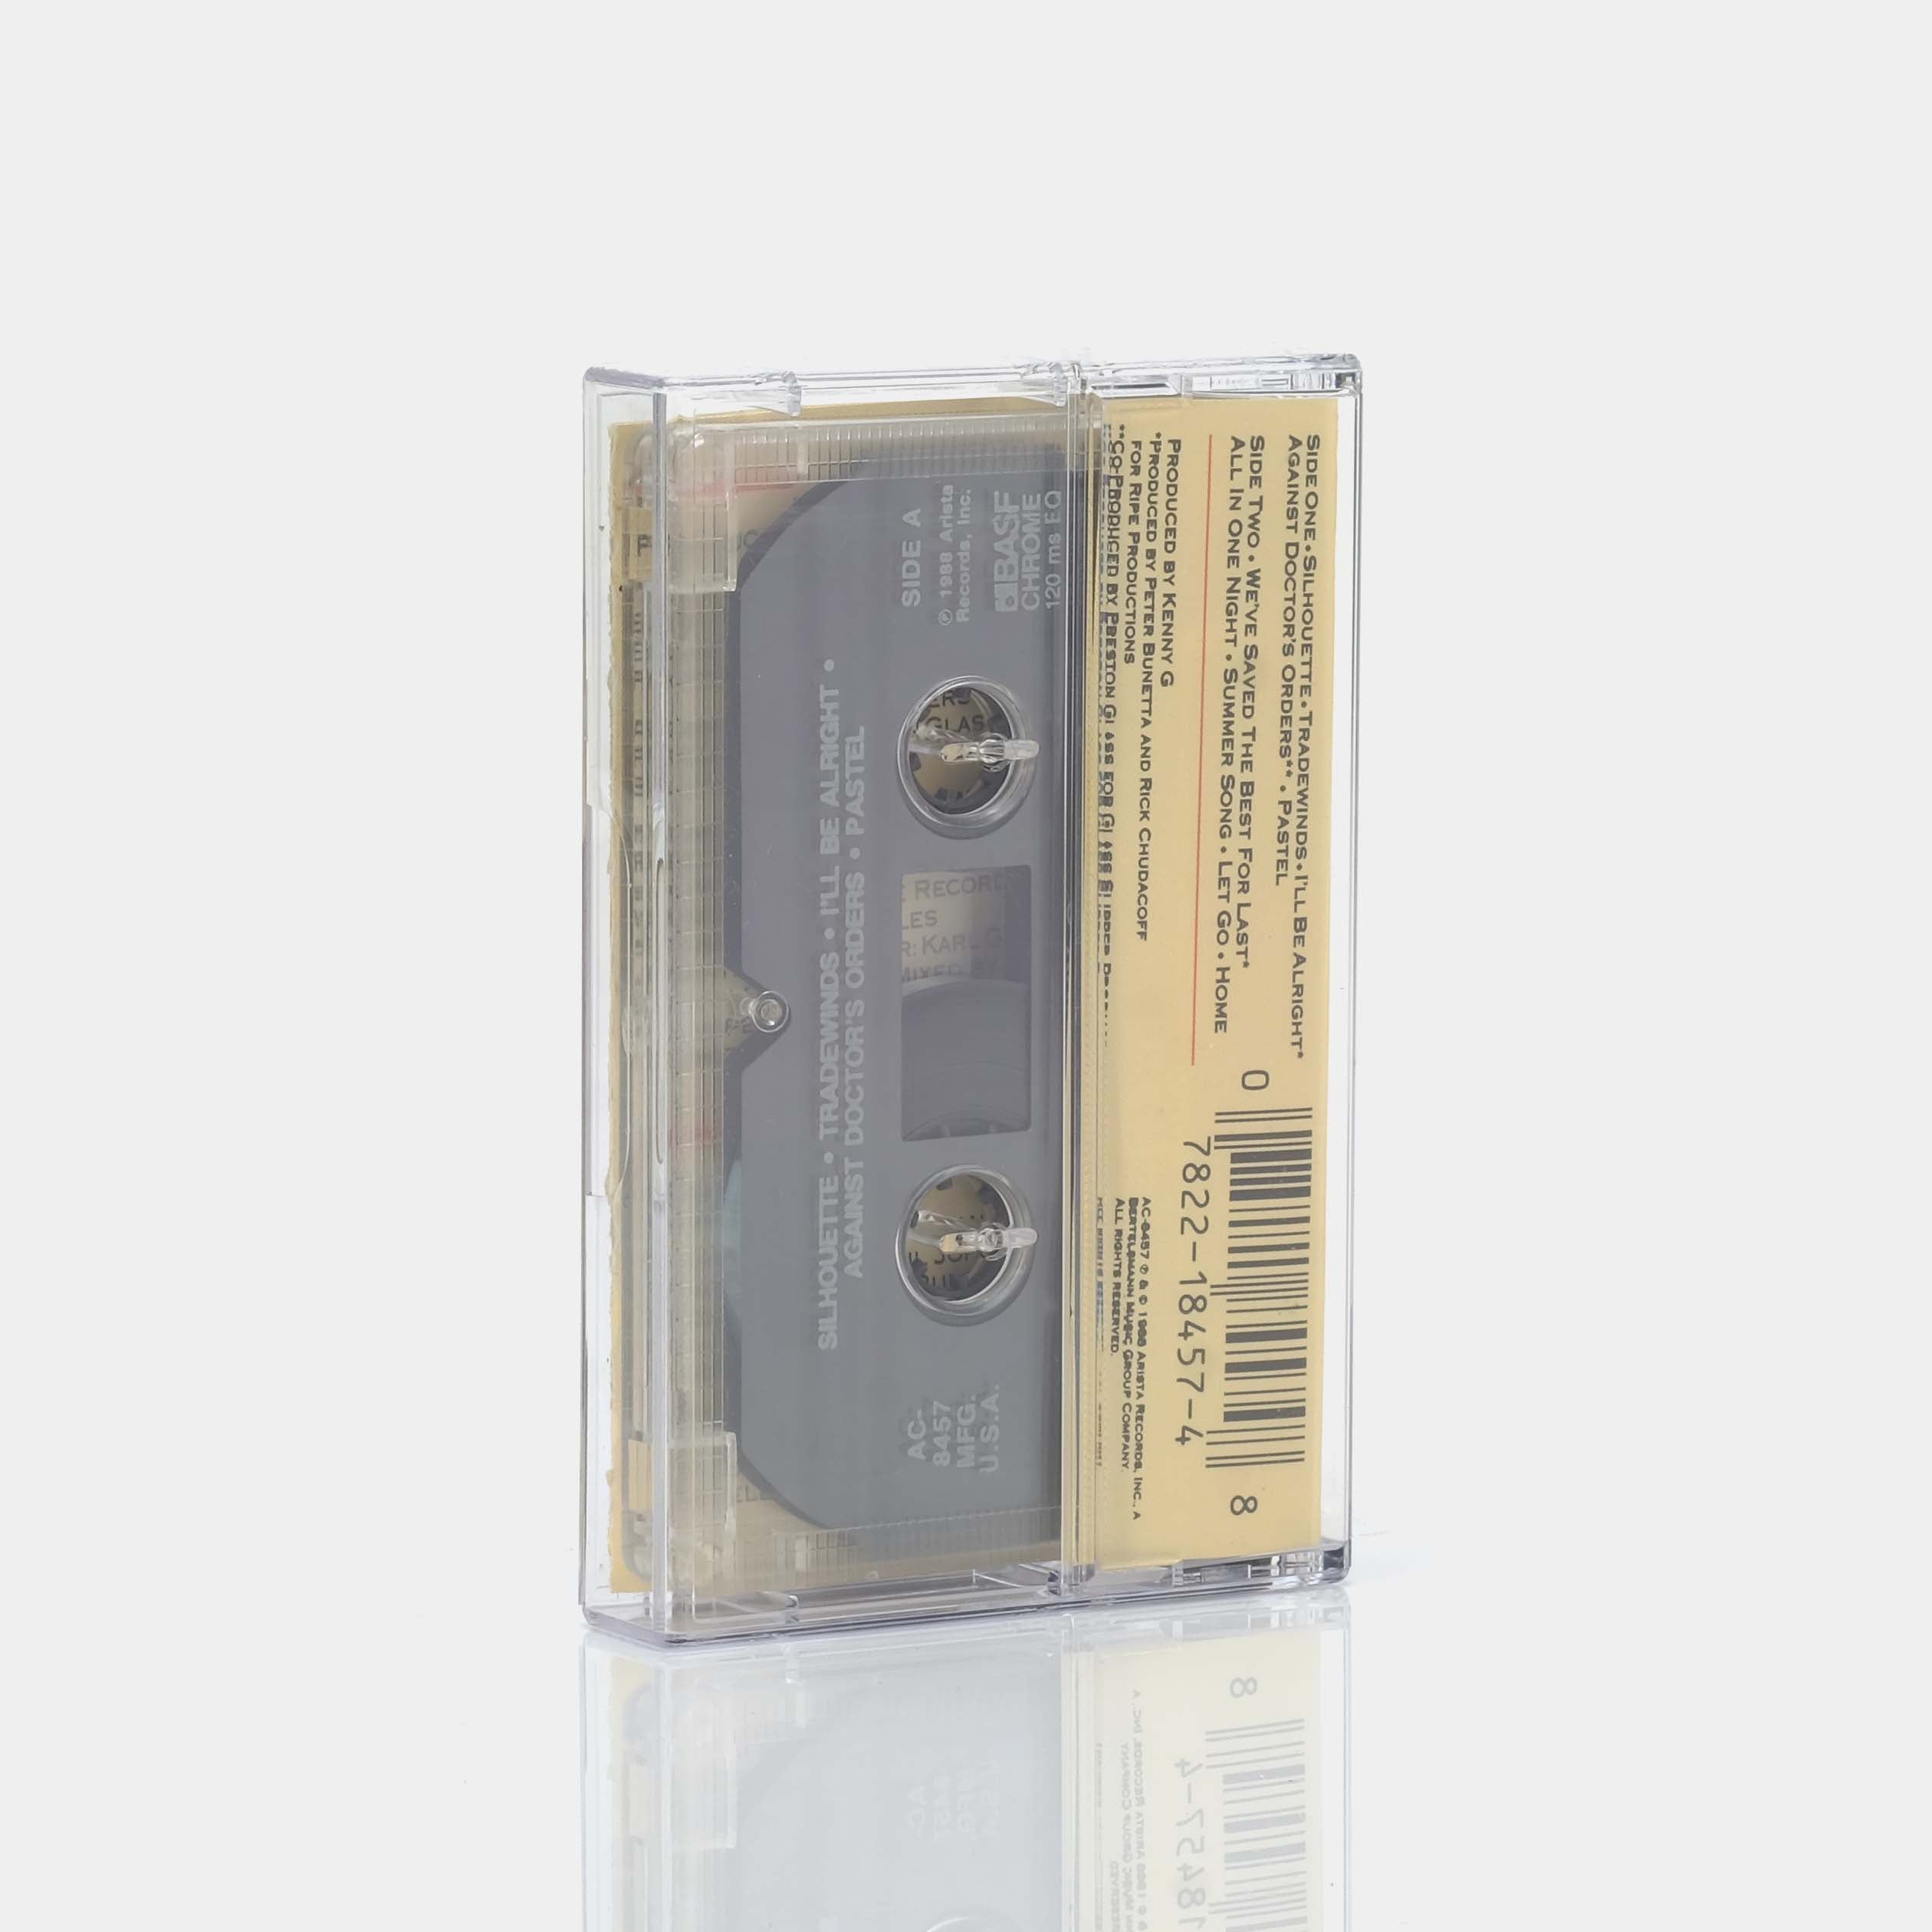 Kenny G - Silhouette Cassette Tape